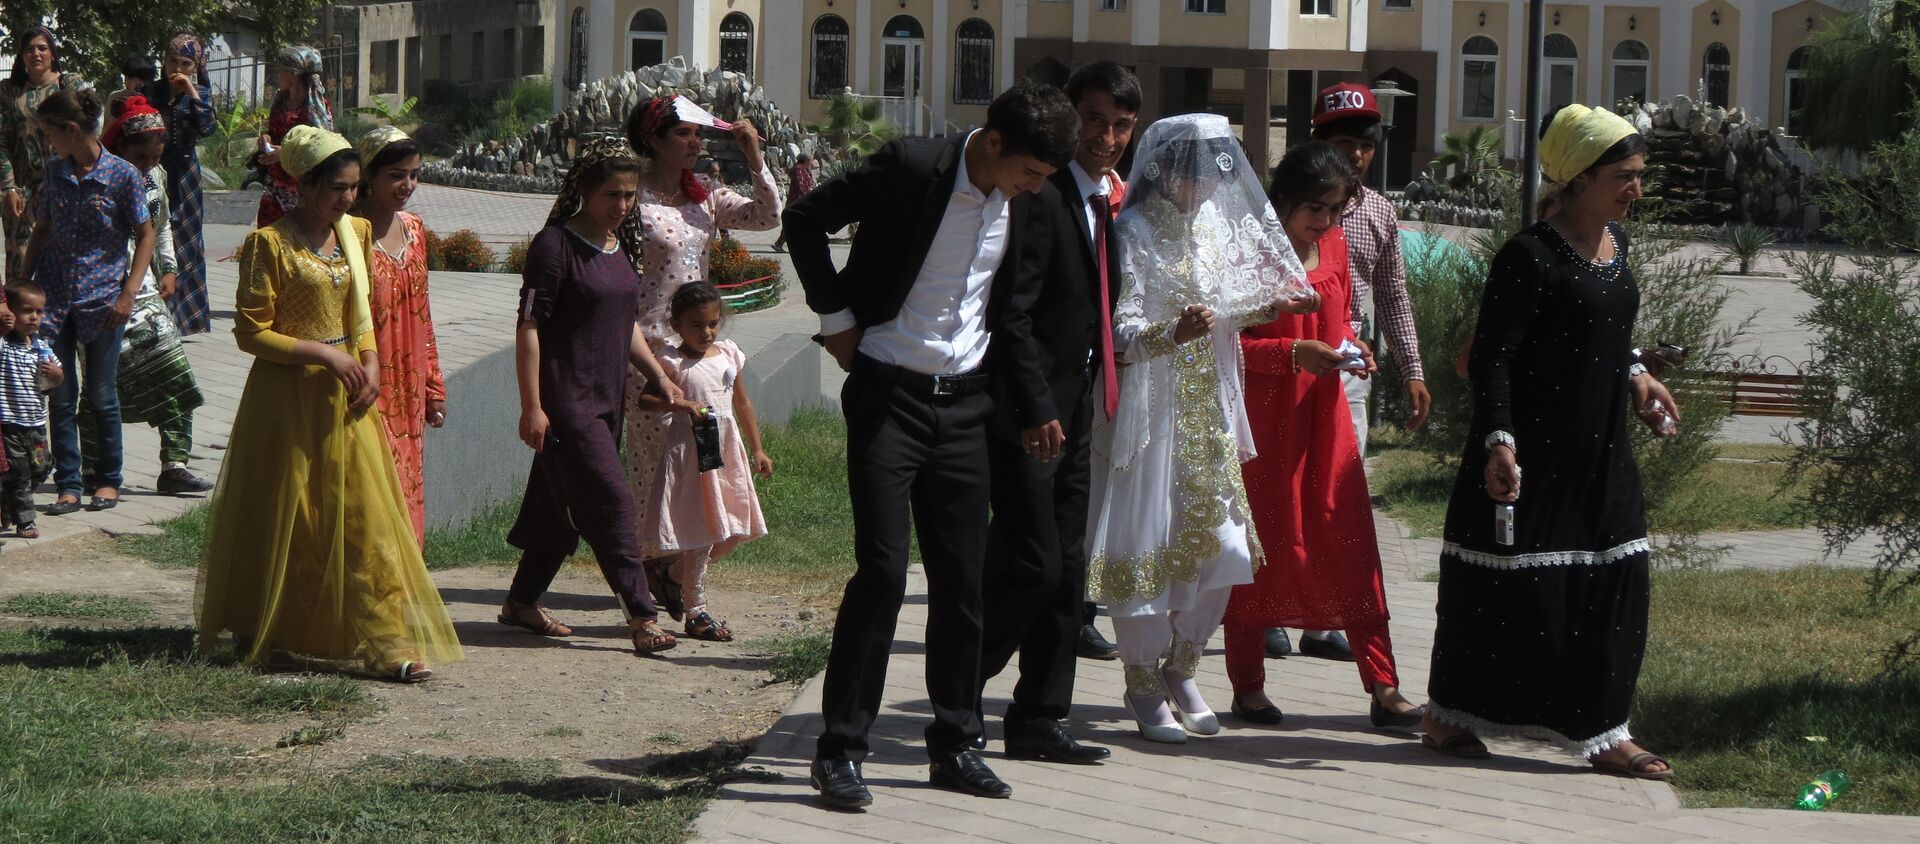 Свадебная церемония в Таджикистане, архивное фото - Sputnik Тоҷикистон, 1920, 24.07.2020